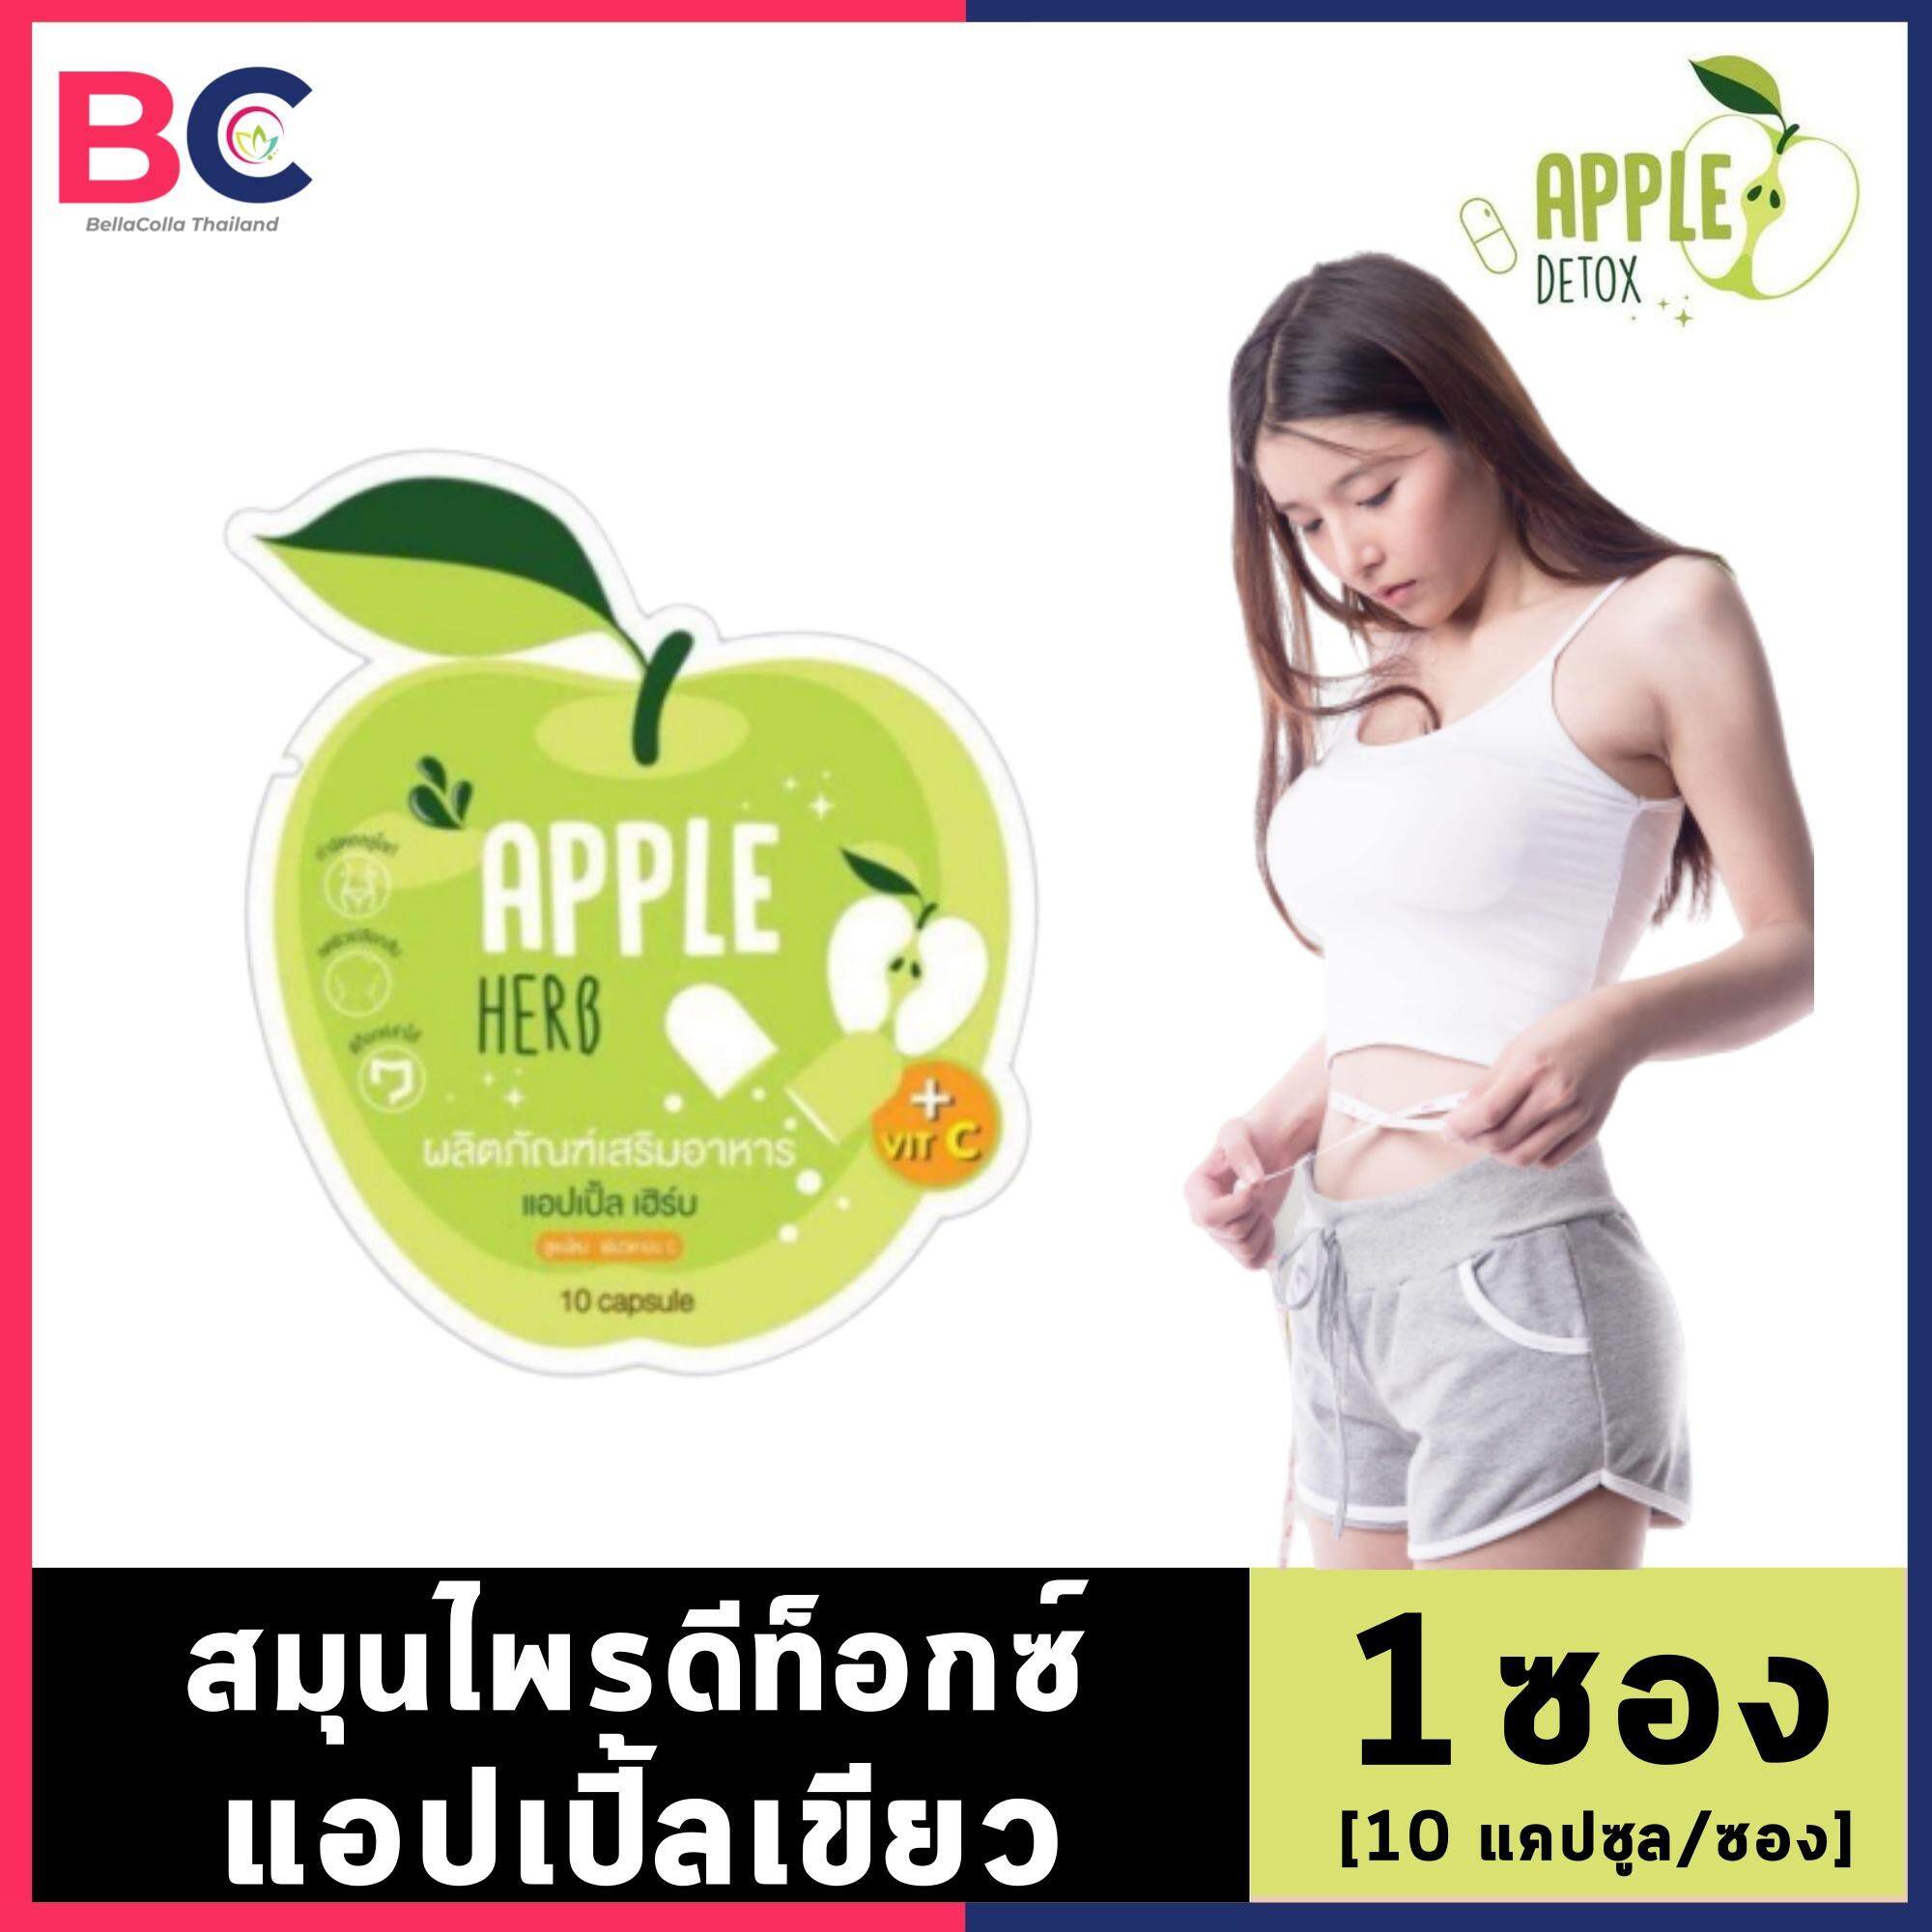 Apple Herb Detox [1 ซอง] [10 แคปซูล/ซอง] สมุนไพรแอปเปิ้ลเขียวดีท็อกซ์ Bc อ้วนผอม. 